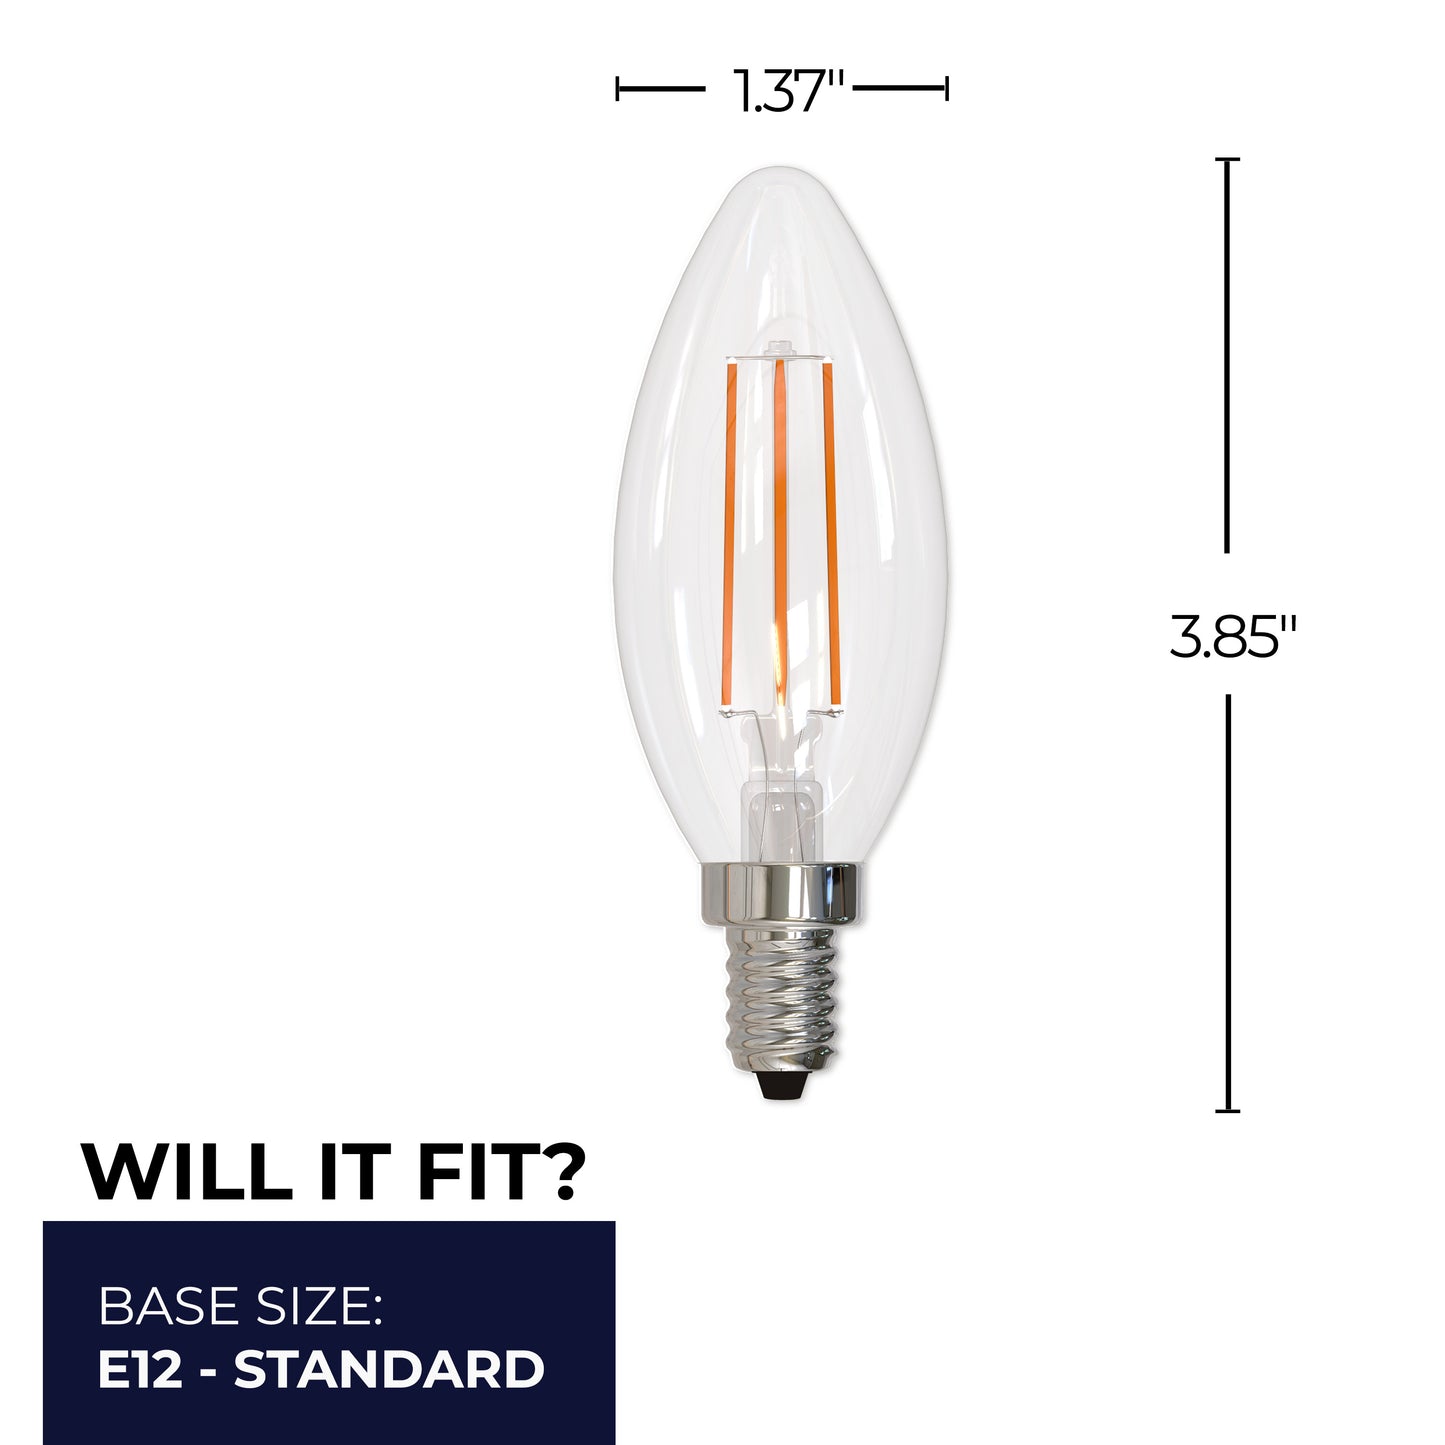 776637 - Filaments Dimmable Clear B11 Candelabra LED Light Bulb - 5 Watt - 3000K - 4 Pack